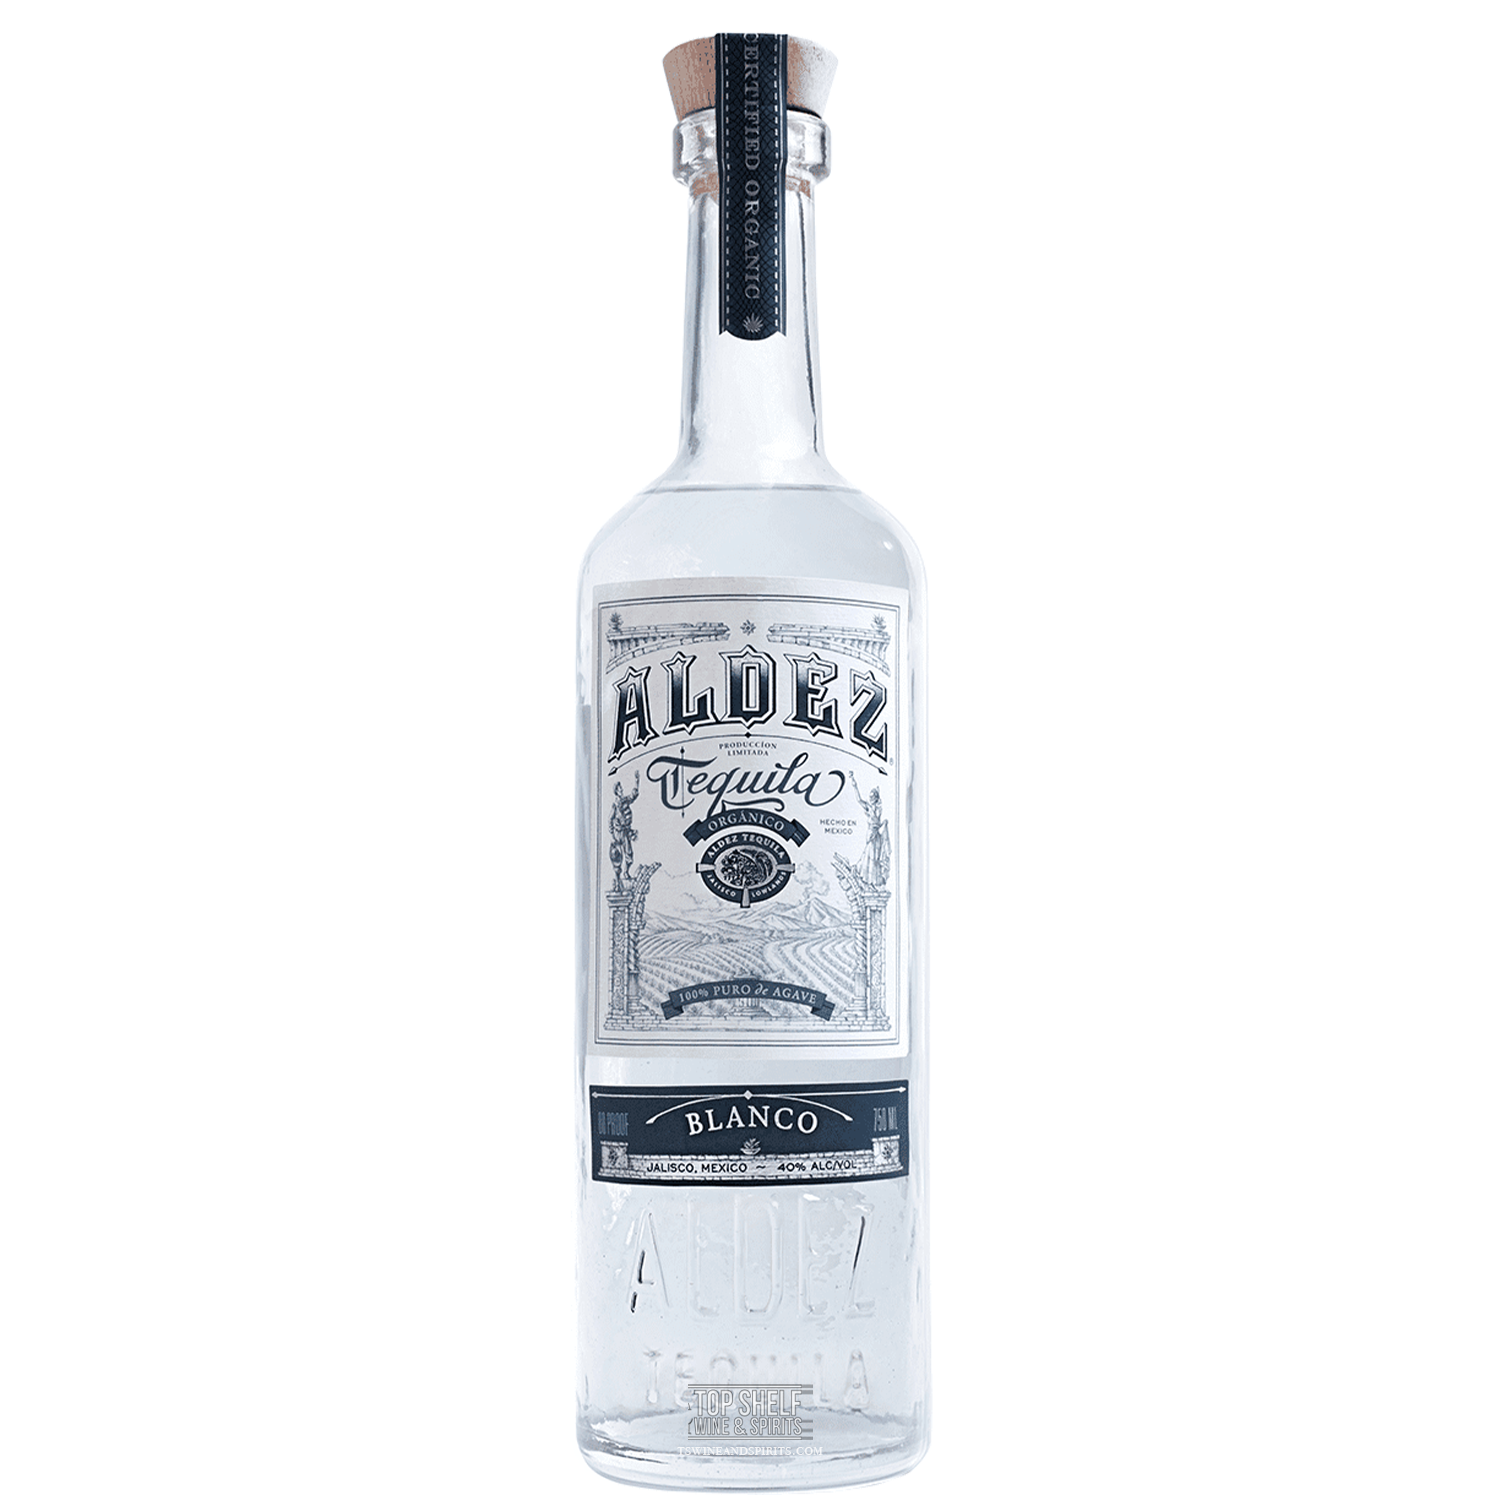 Aldez Organic Blanco Tequila